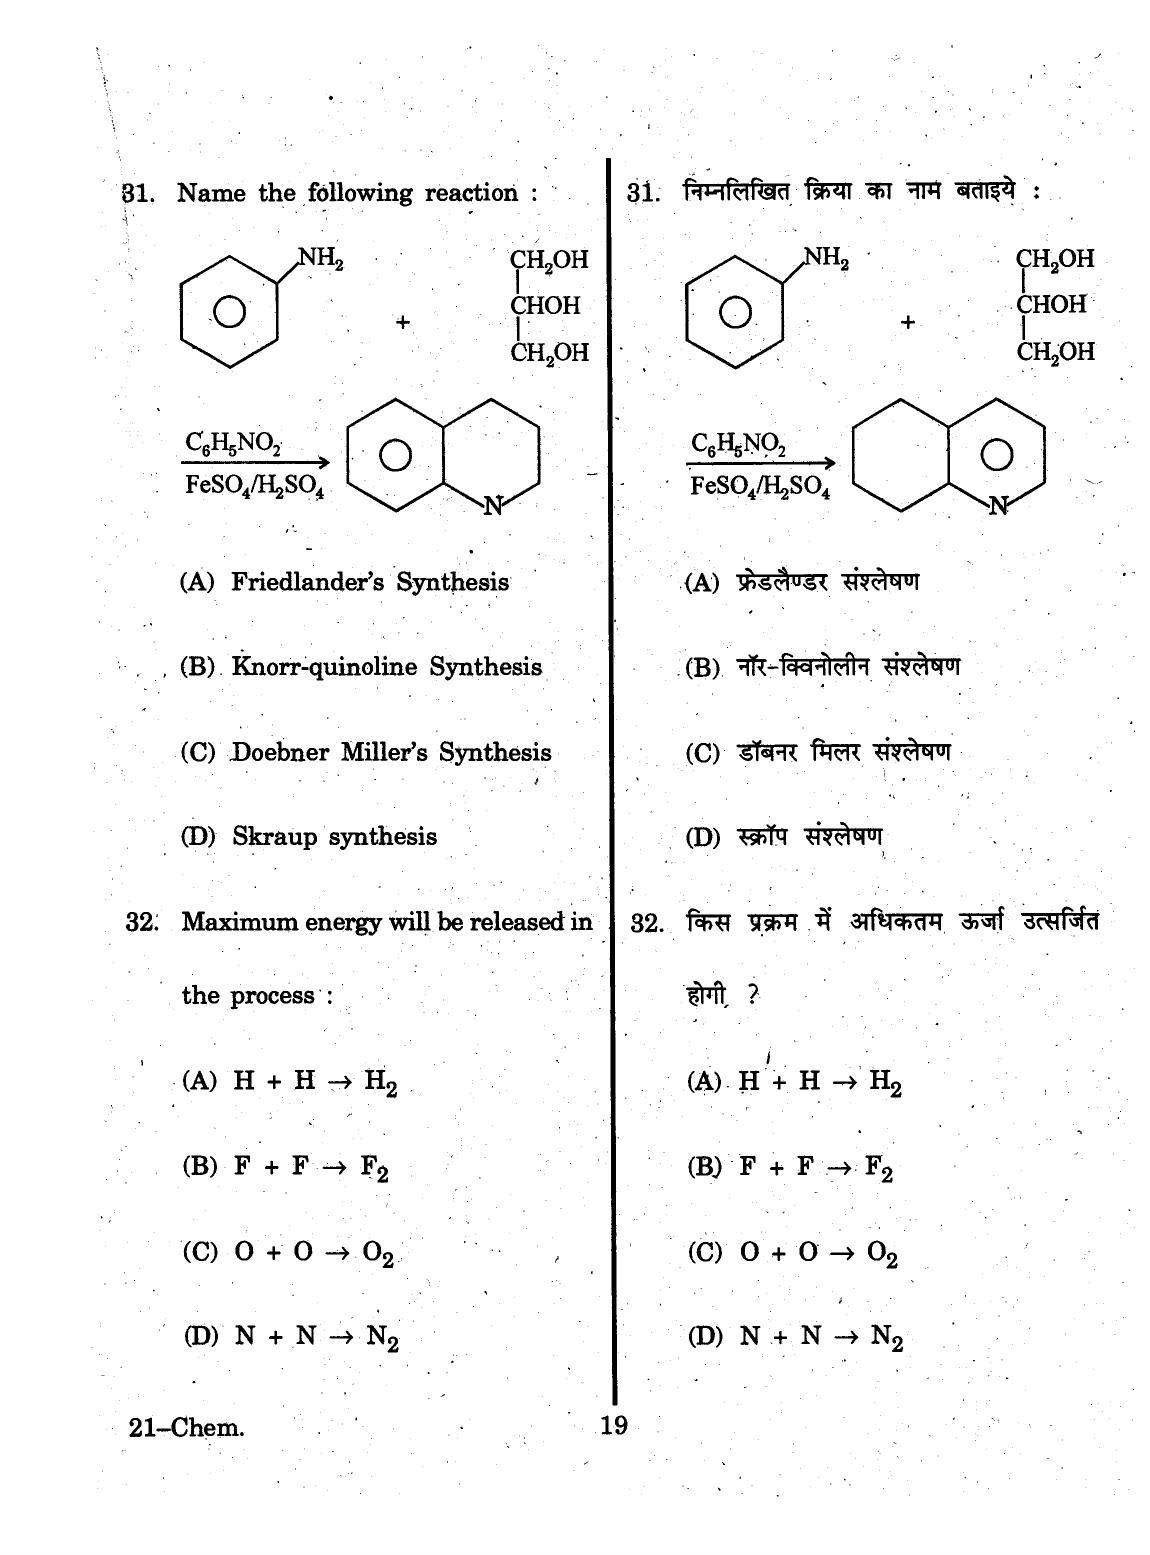 URATPG 2015 Chemisty Question Paper - Page 19